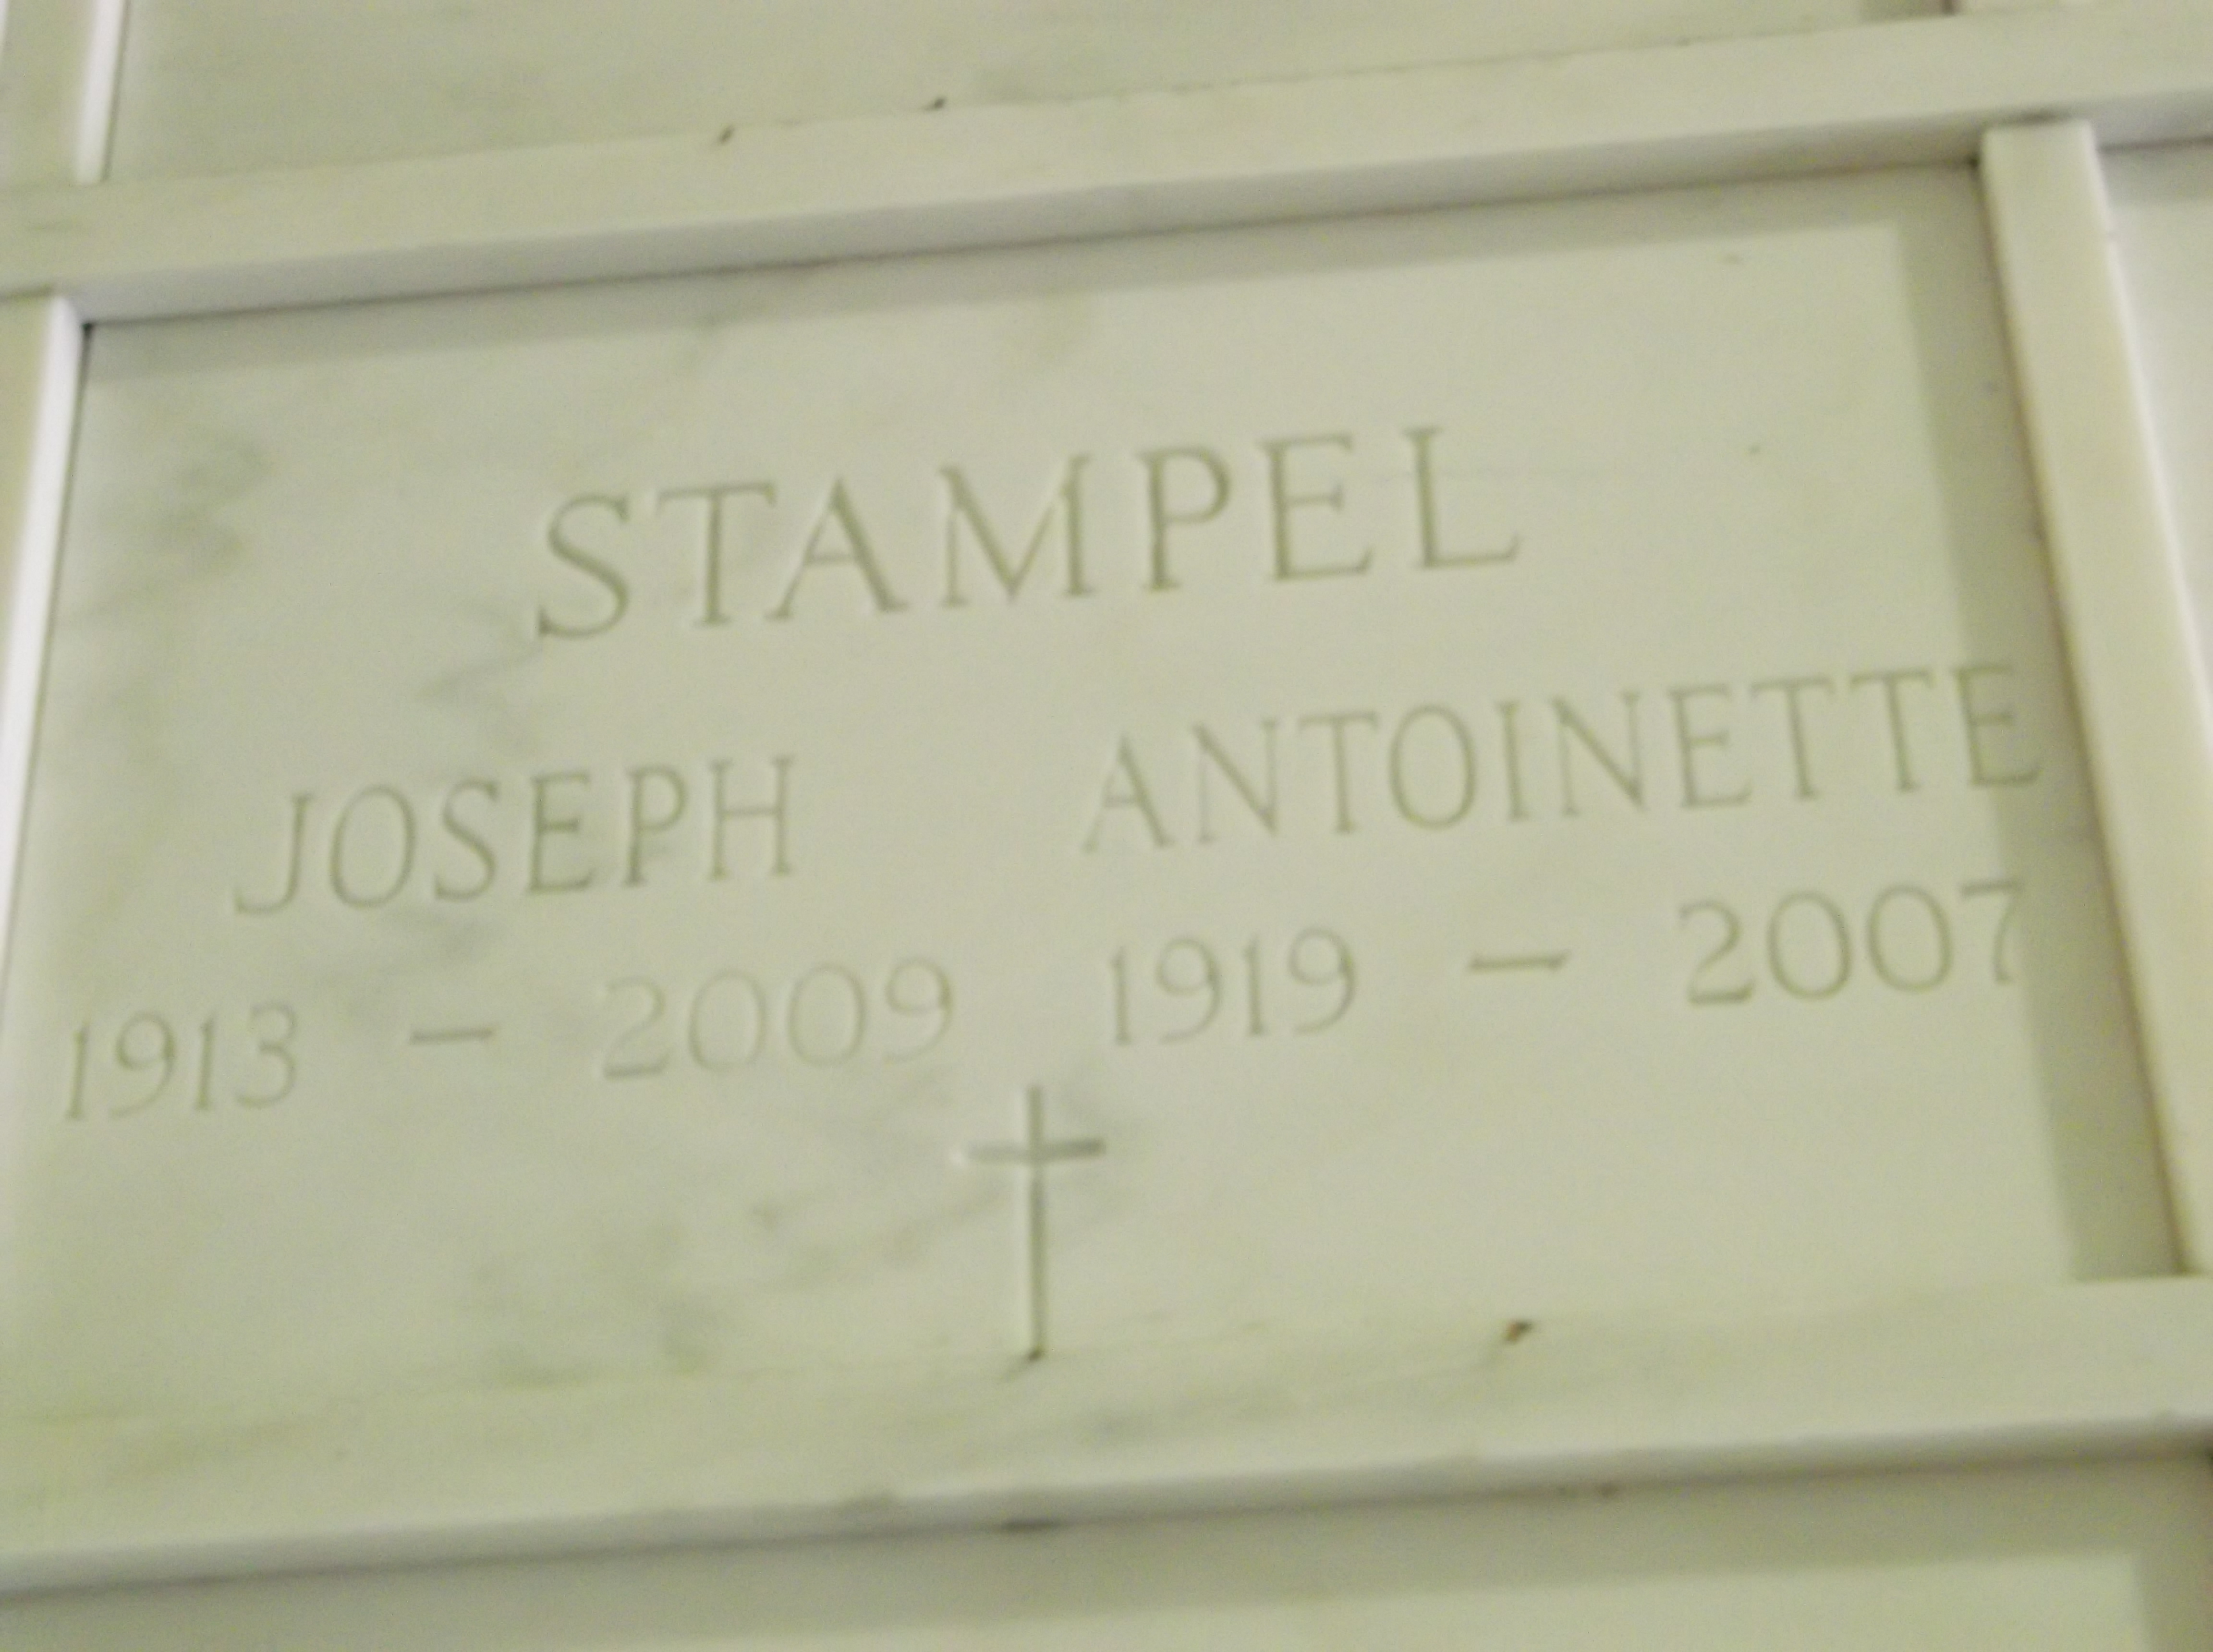 Antoinette Stampel